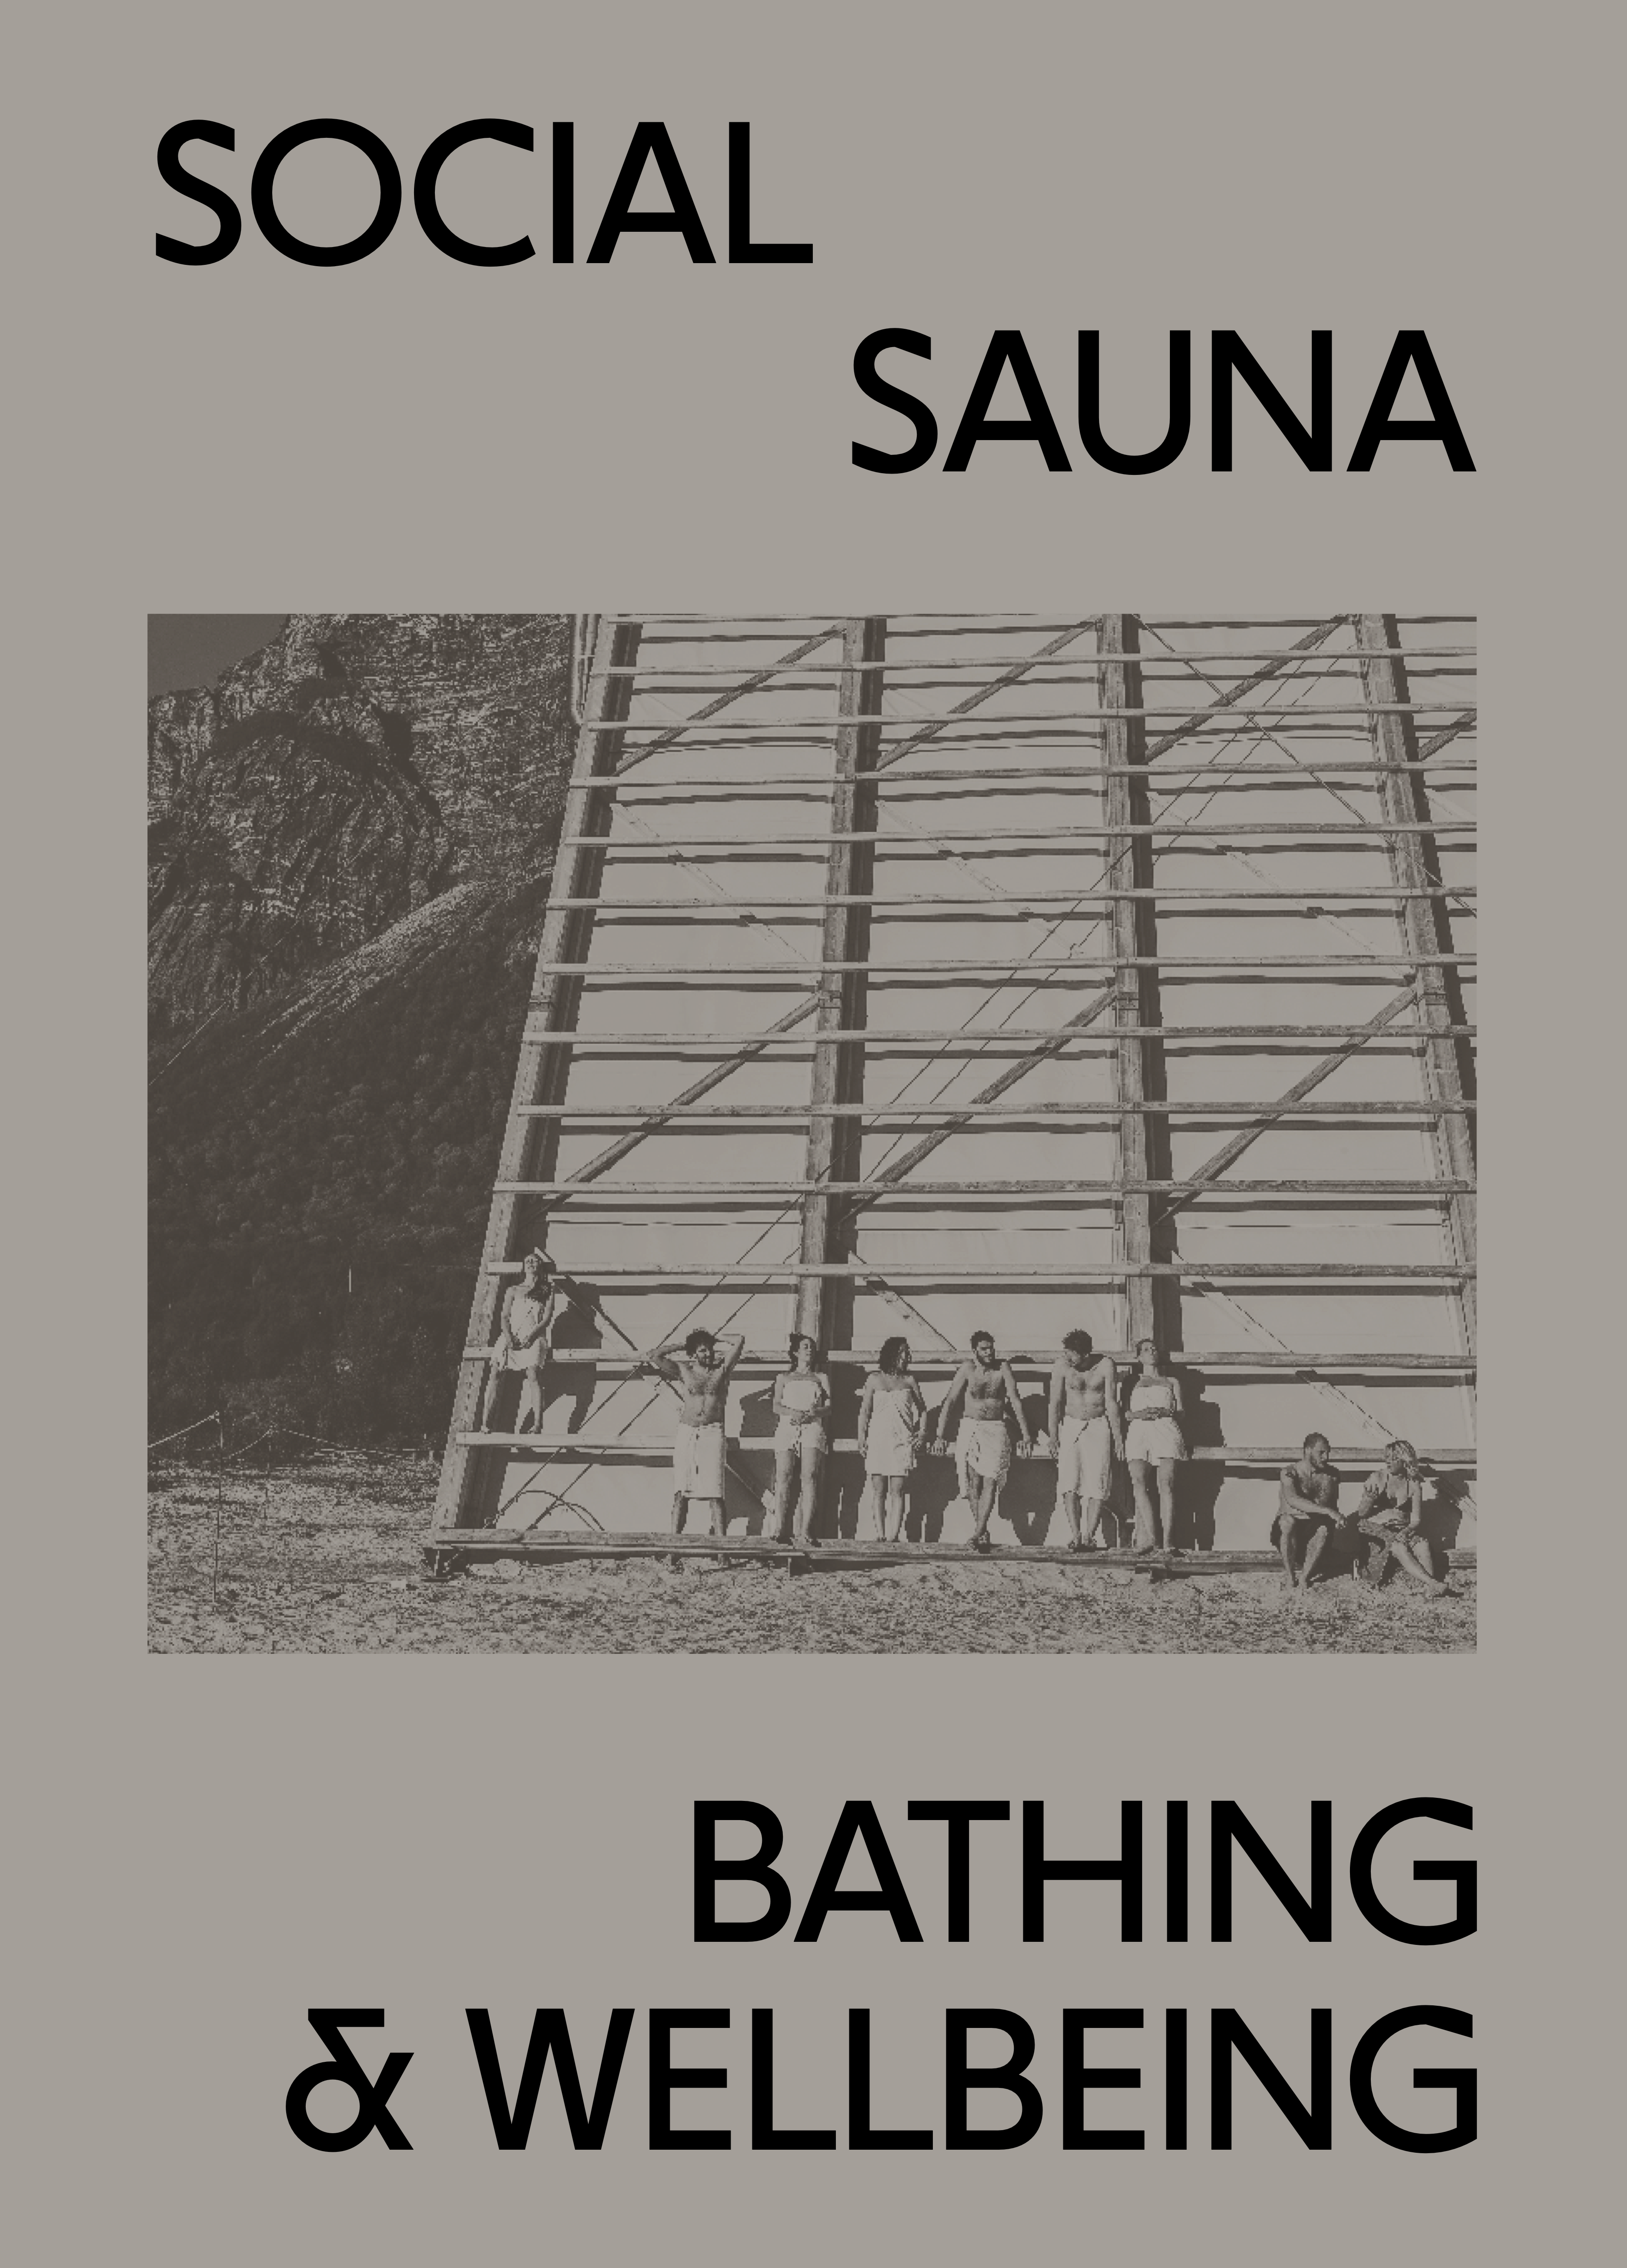 SOCIAL SAUNA – BATHING & WELLBEING